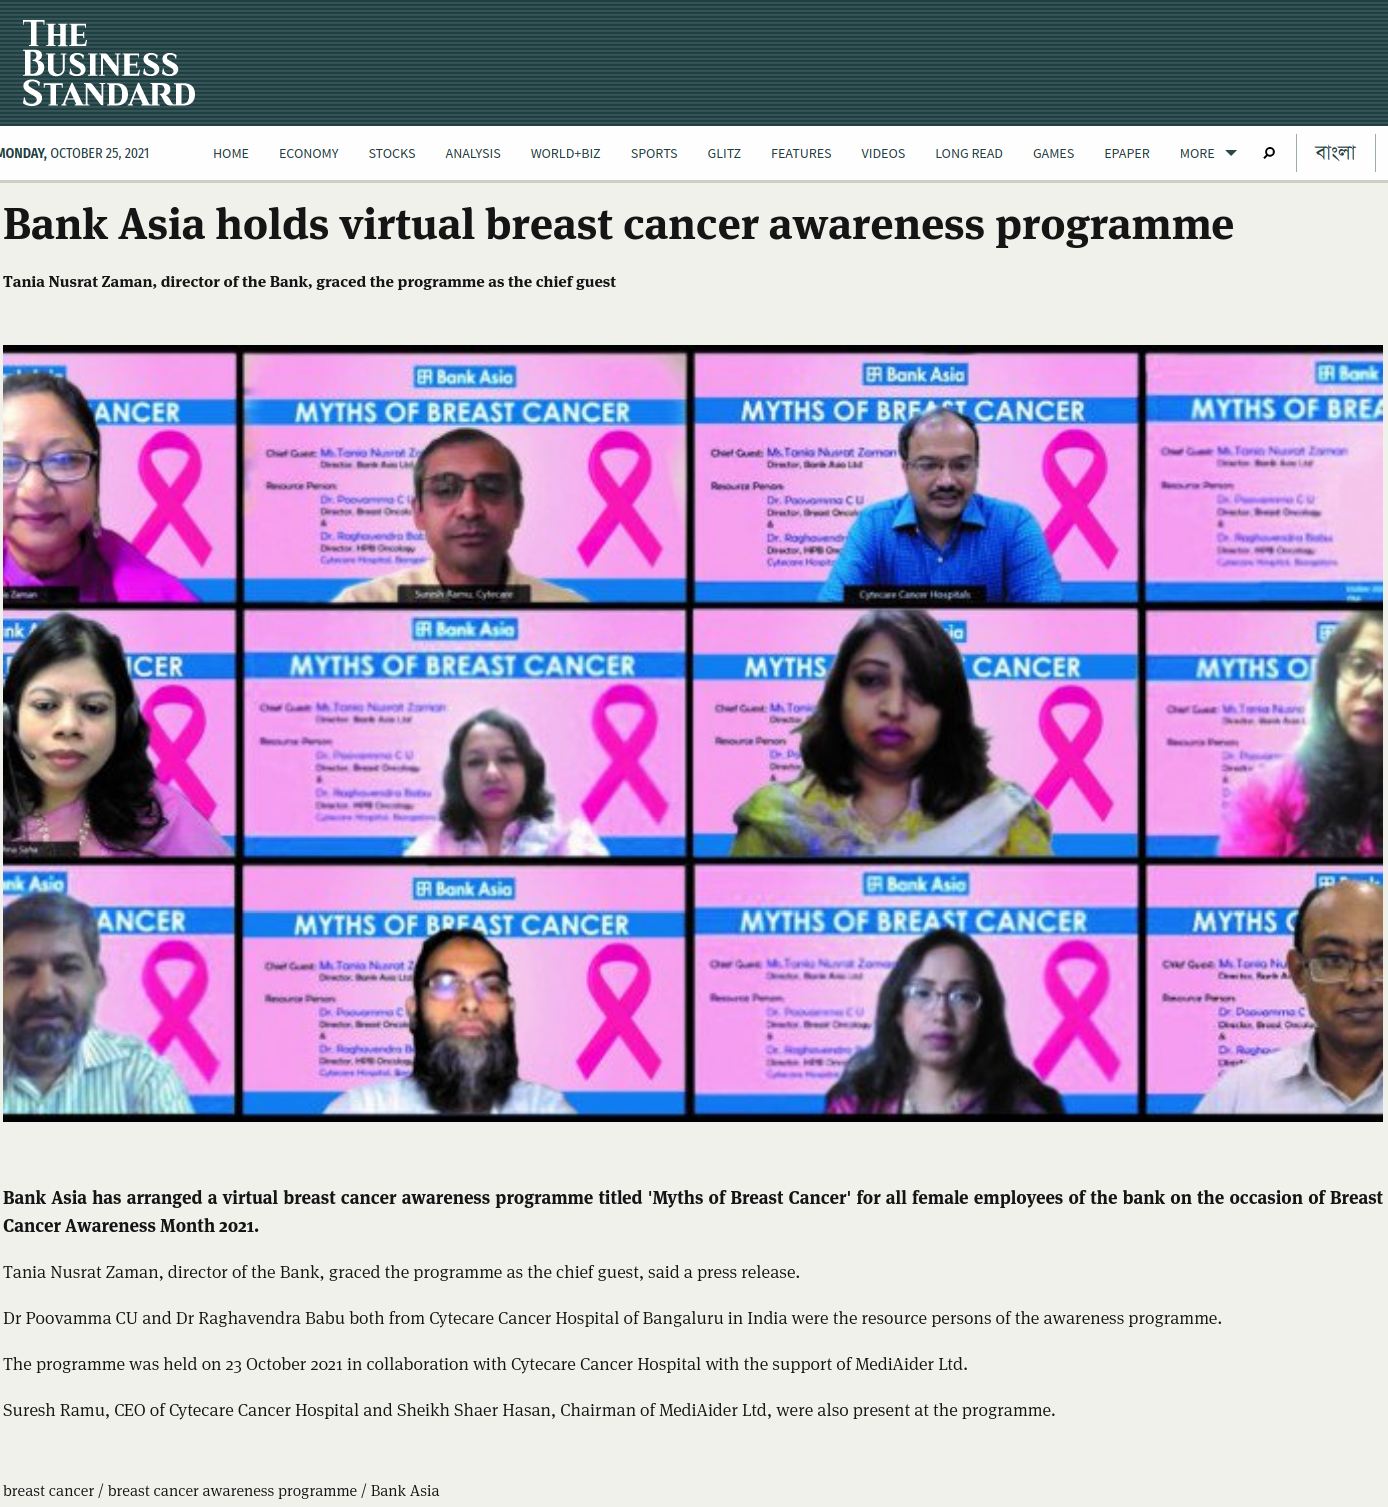 Virtual breast cancer awareness program by Bank Asia - Cytecare